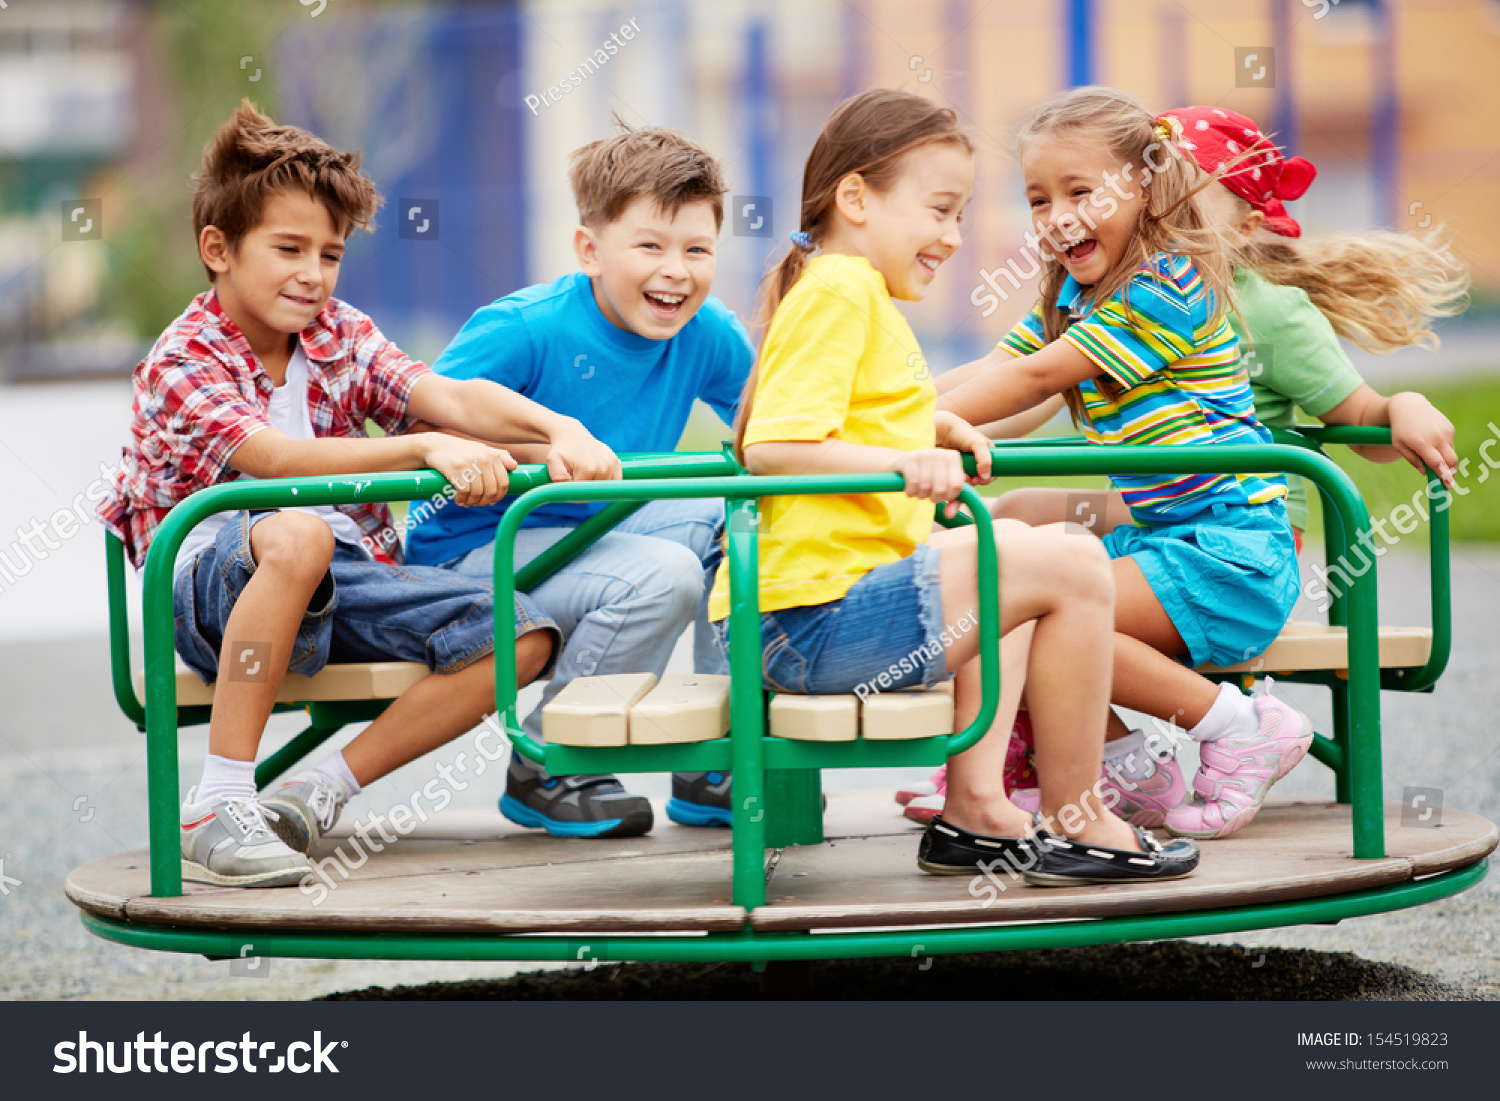 Image of joyful friends having fun on carousel outdoors  #154519823